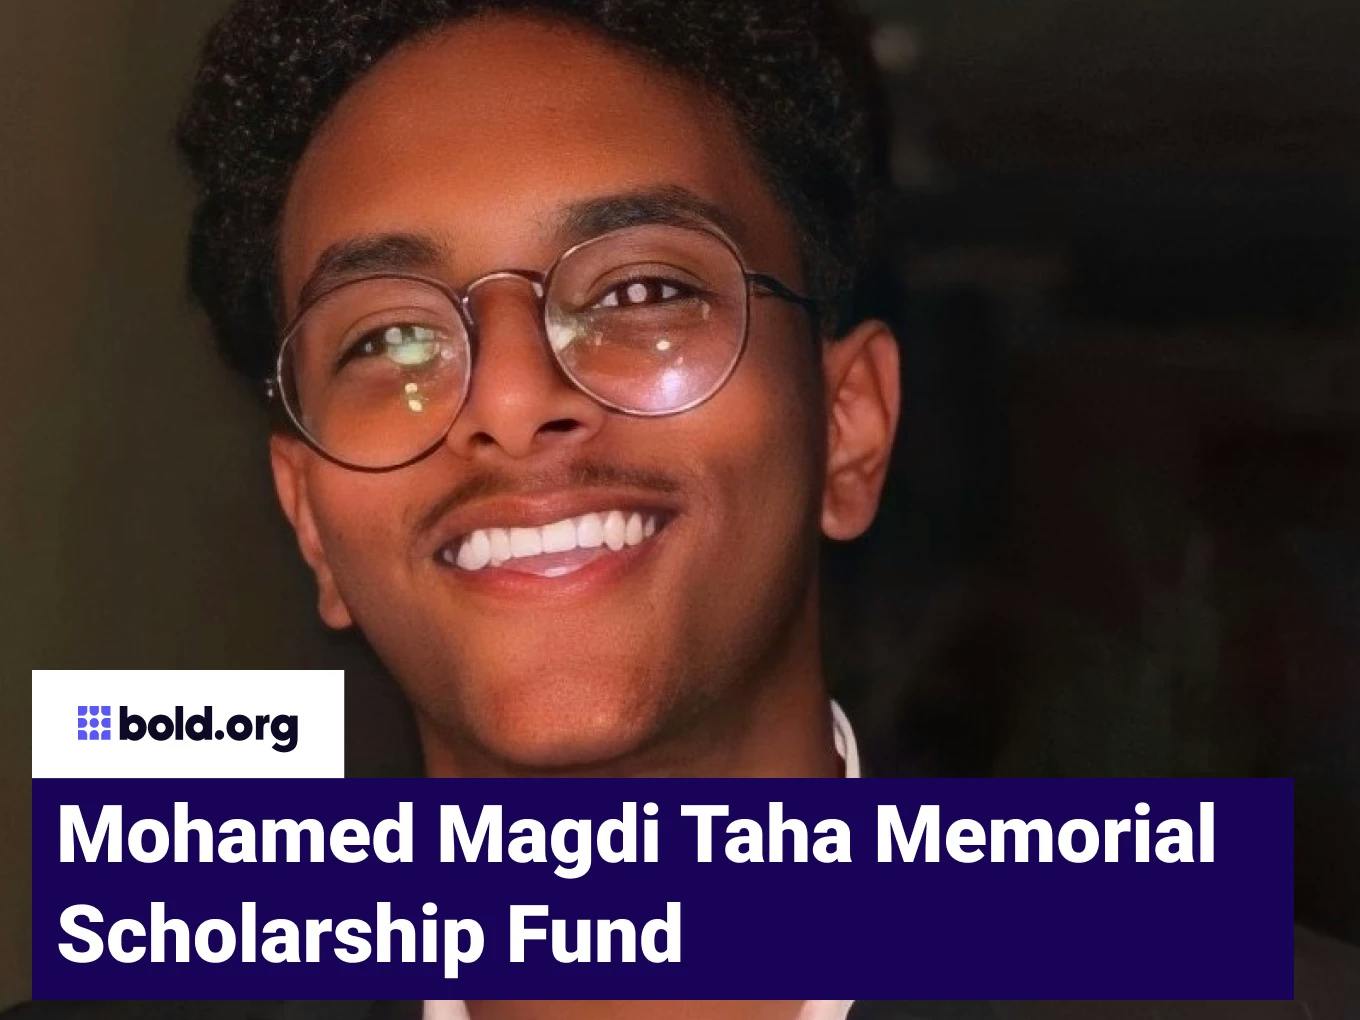 Mohamed Magdi Taha Memorial Scholarship Fund